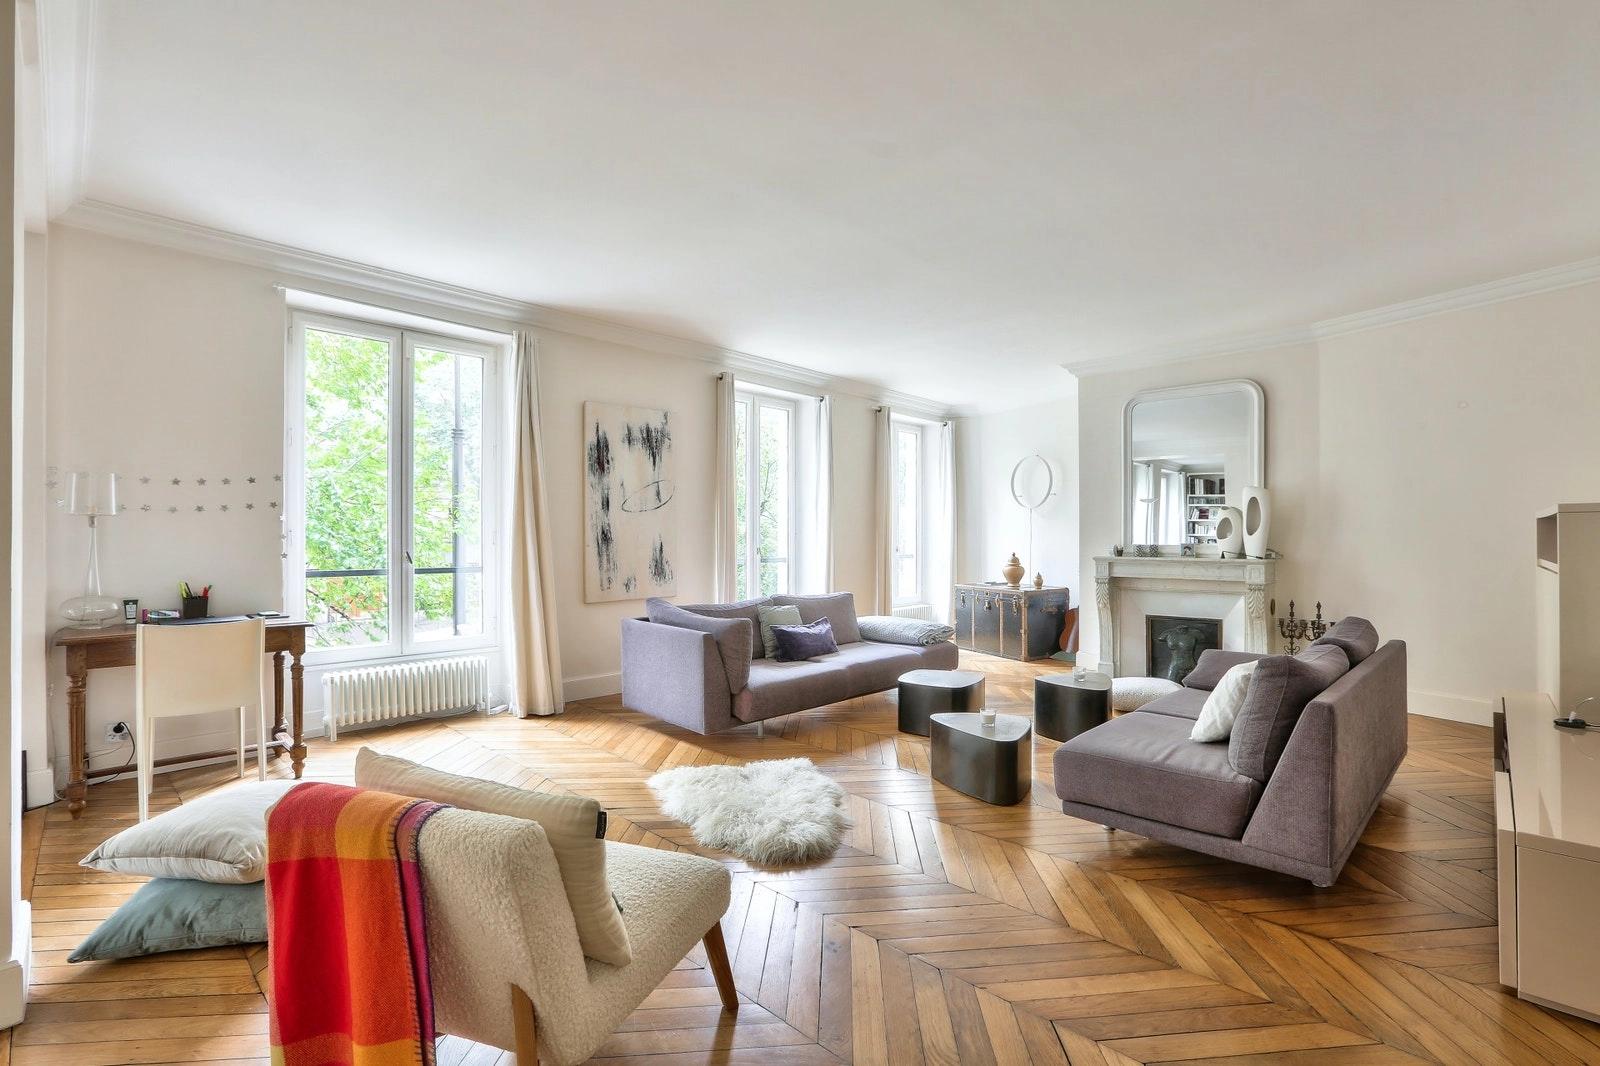 Sala dentro Preciosa, luminosa y cálida casa contemporánea de estilo Haussmann - 4